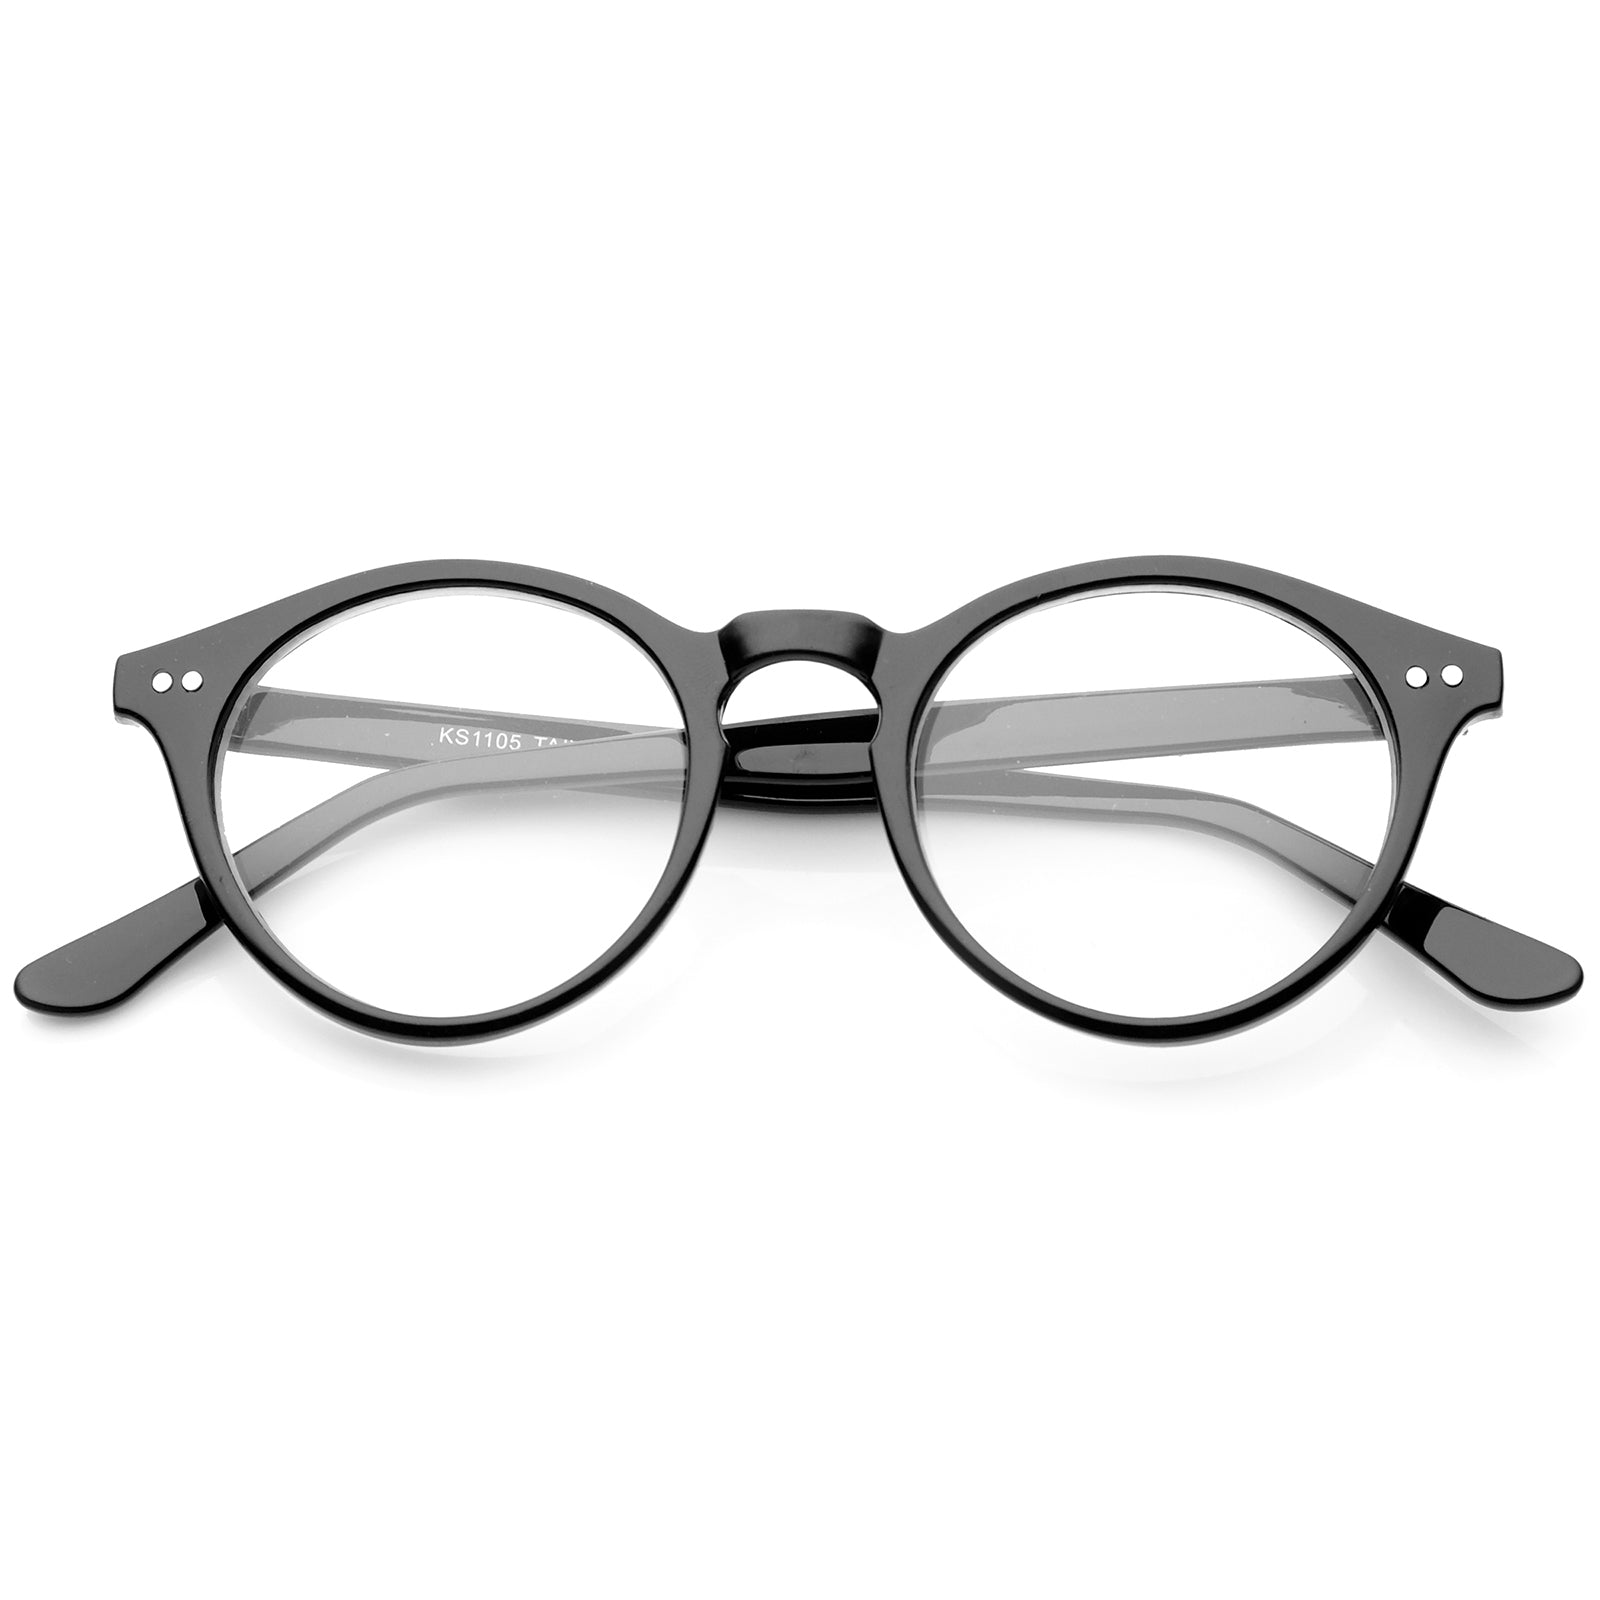 Retro Keyhole Nose Bridge Clear Lens P3 Round Glasses 46mm 